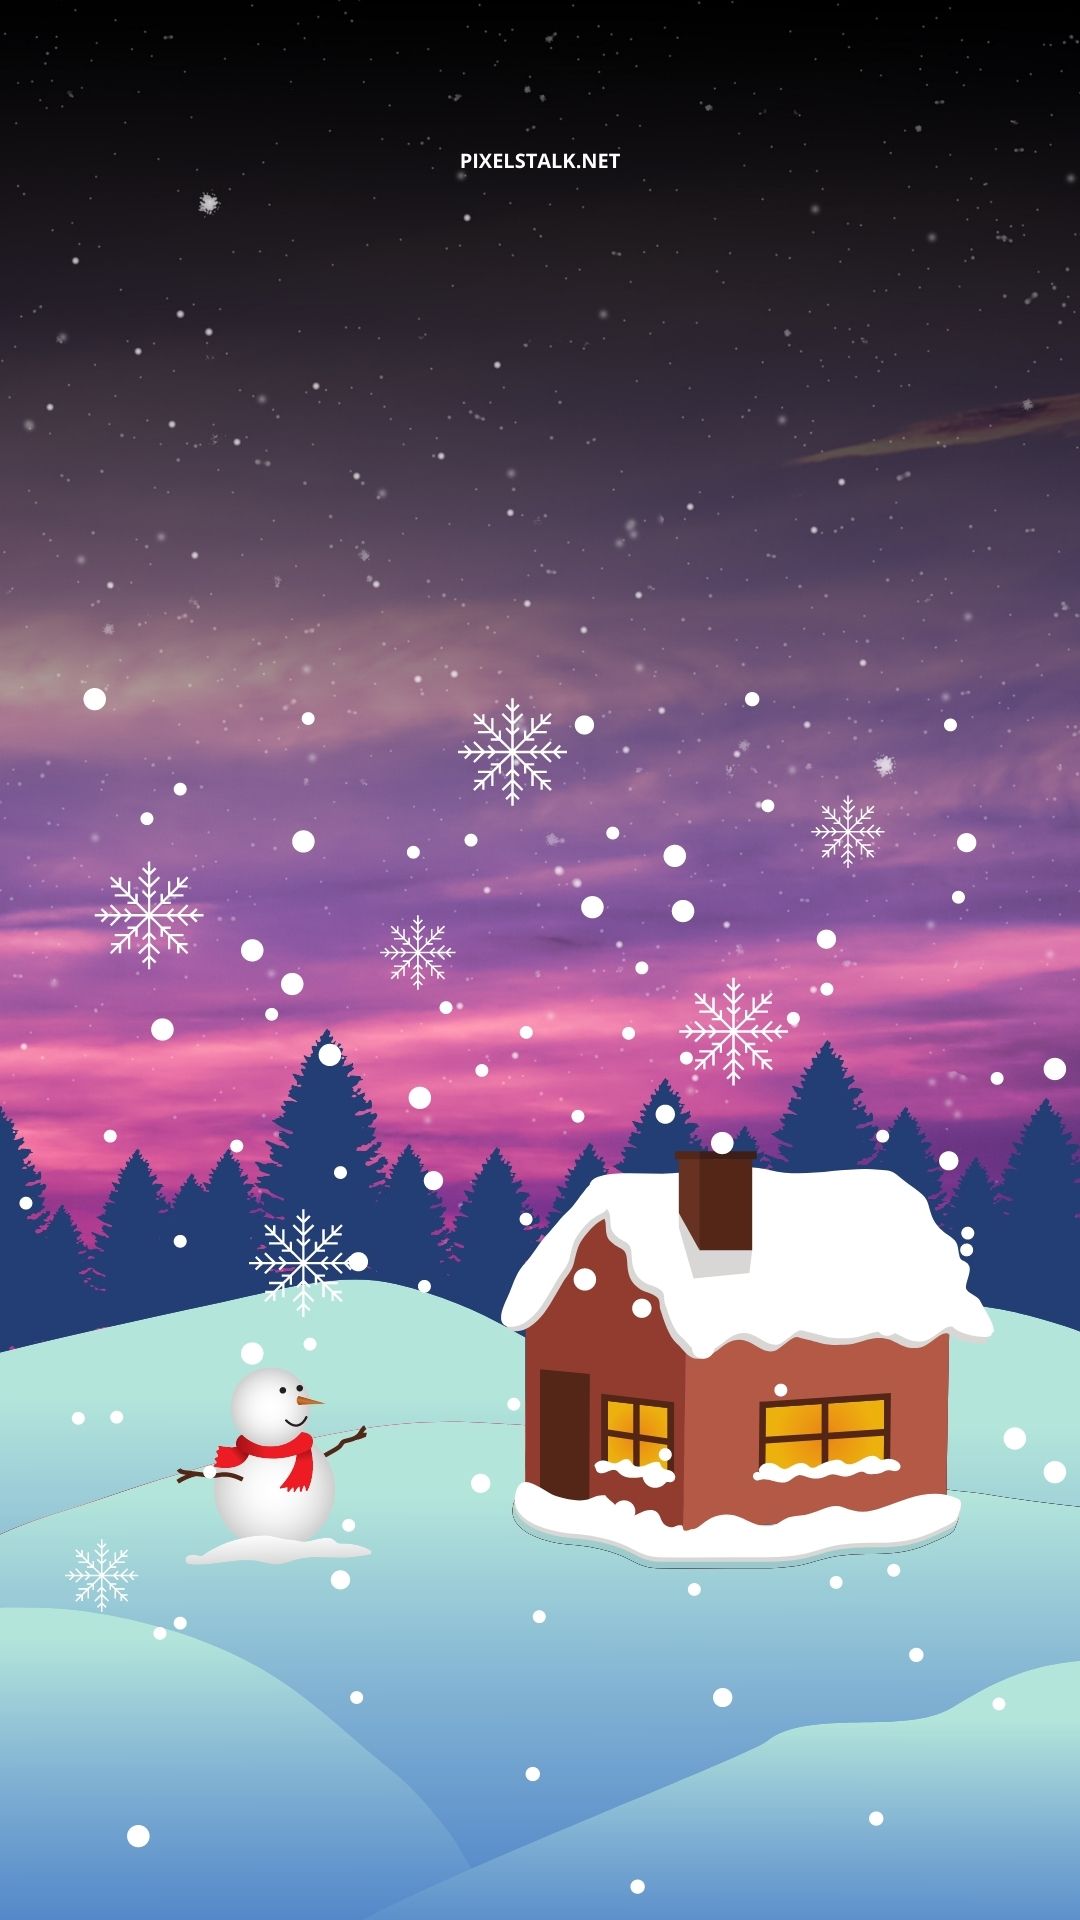 256906 Cute Winter Wallpaper Images Stock Photos  Vectors  Shutterstock